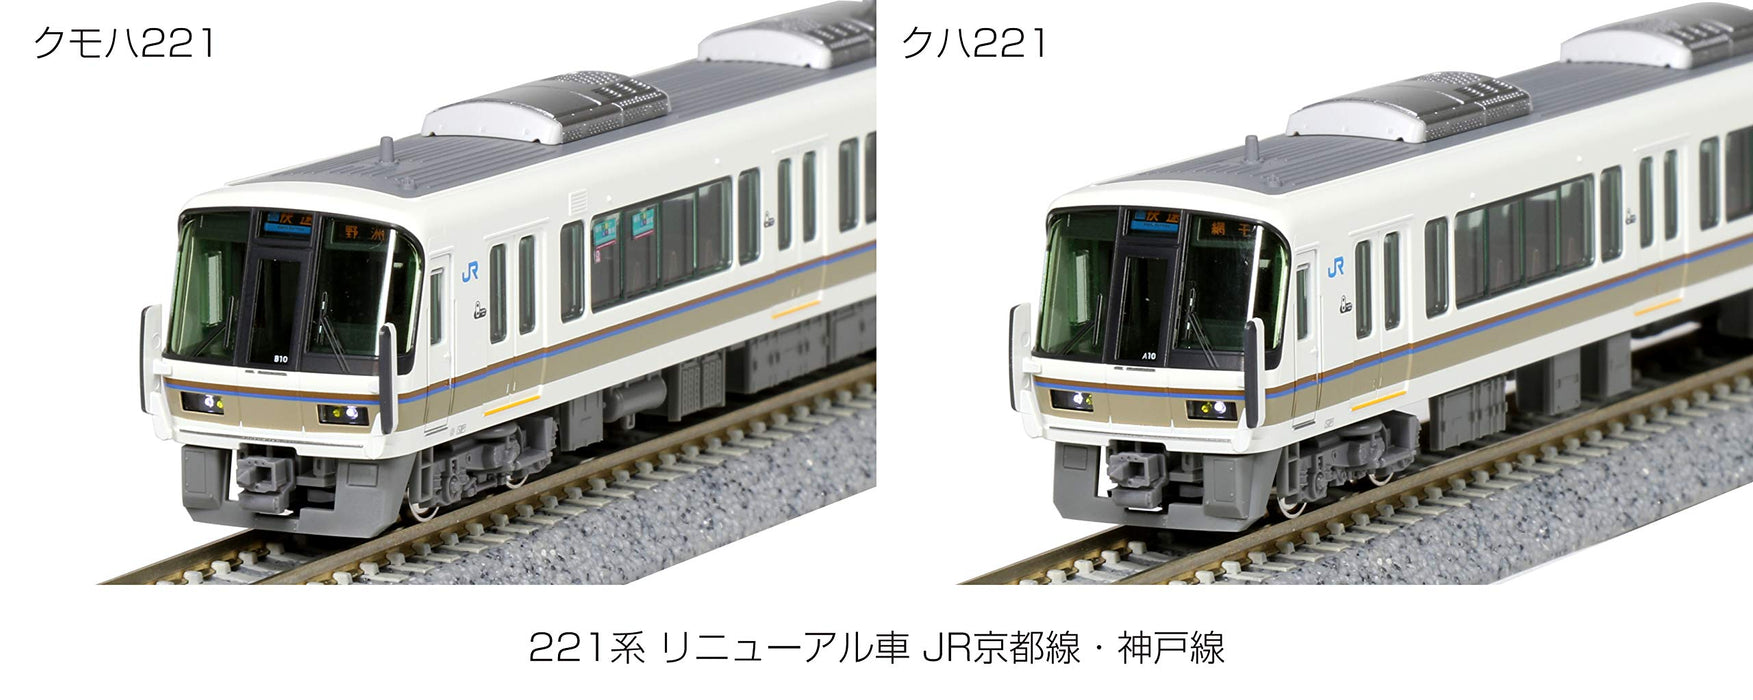 Kato 221 Series 8-Car Train Set N Gauge 10-1578 JR Kyoto/Kobe Line Model